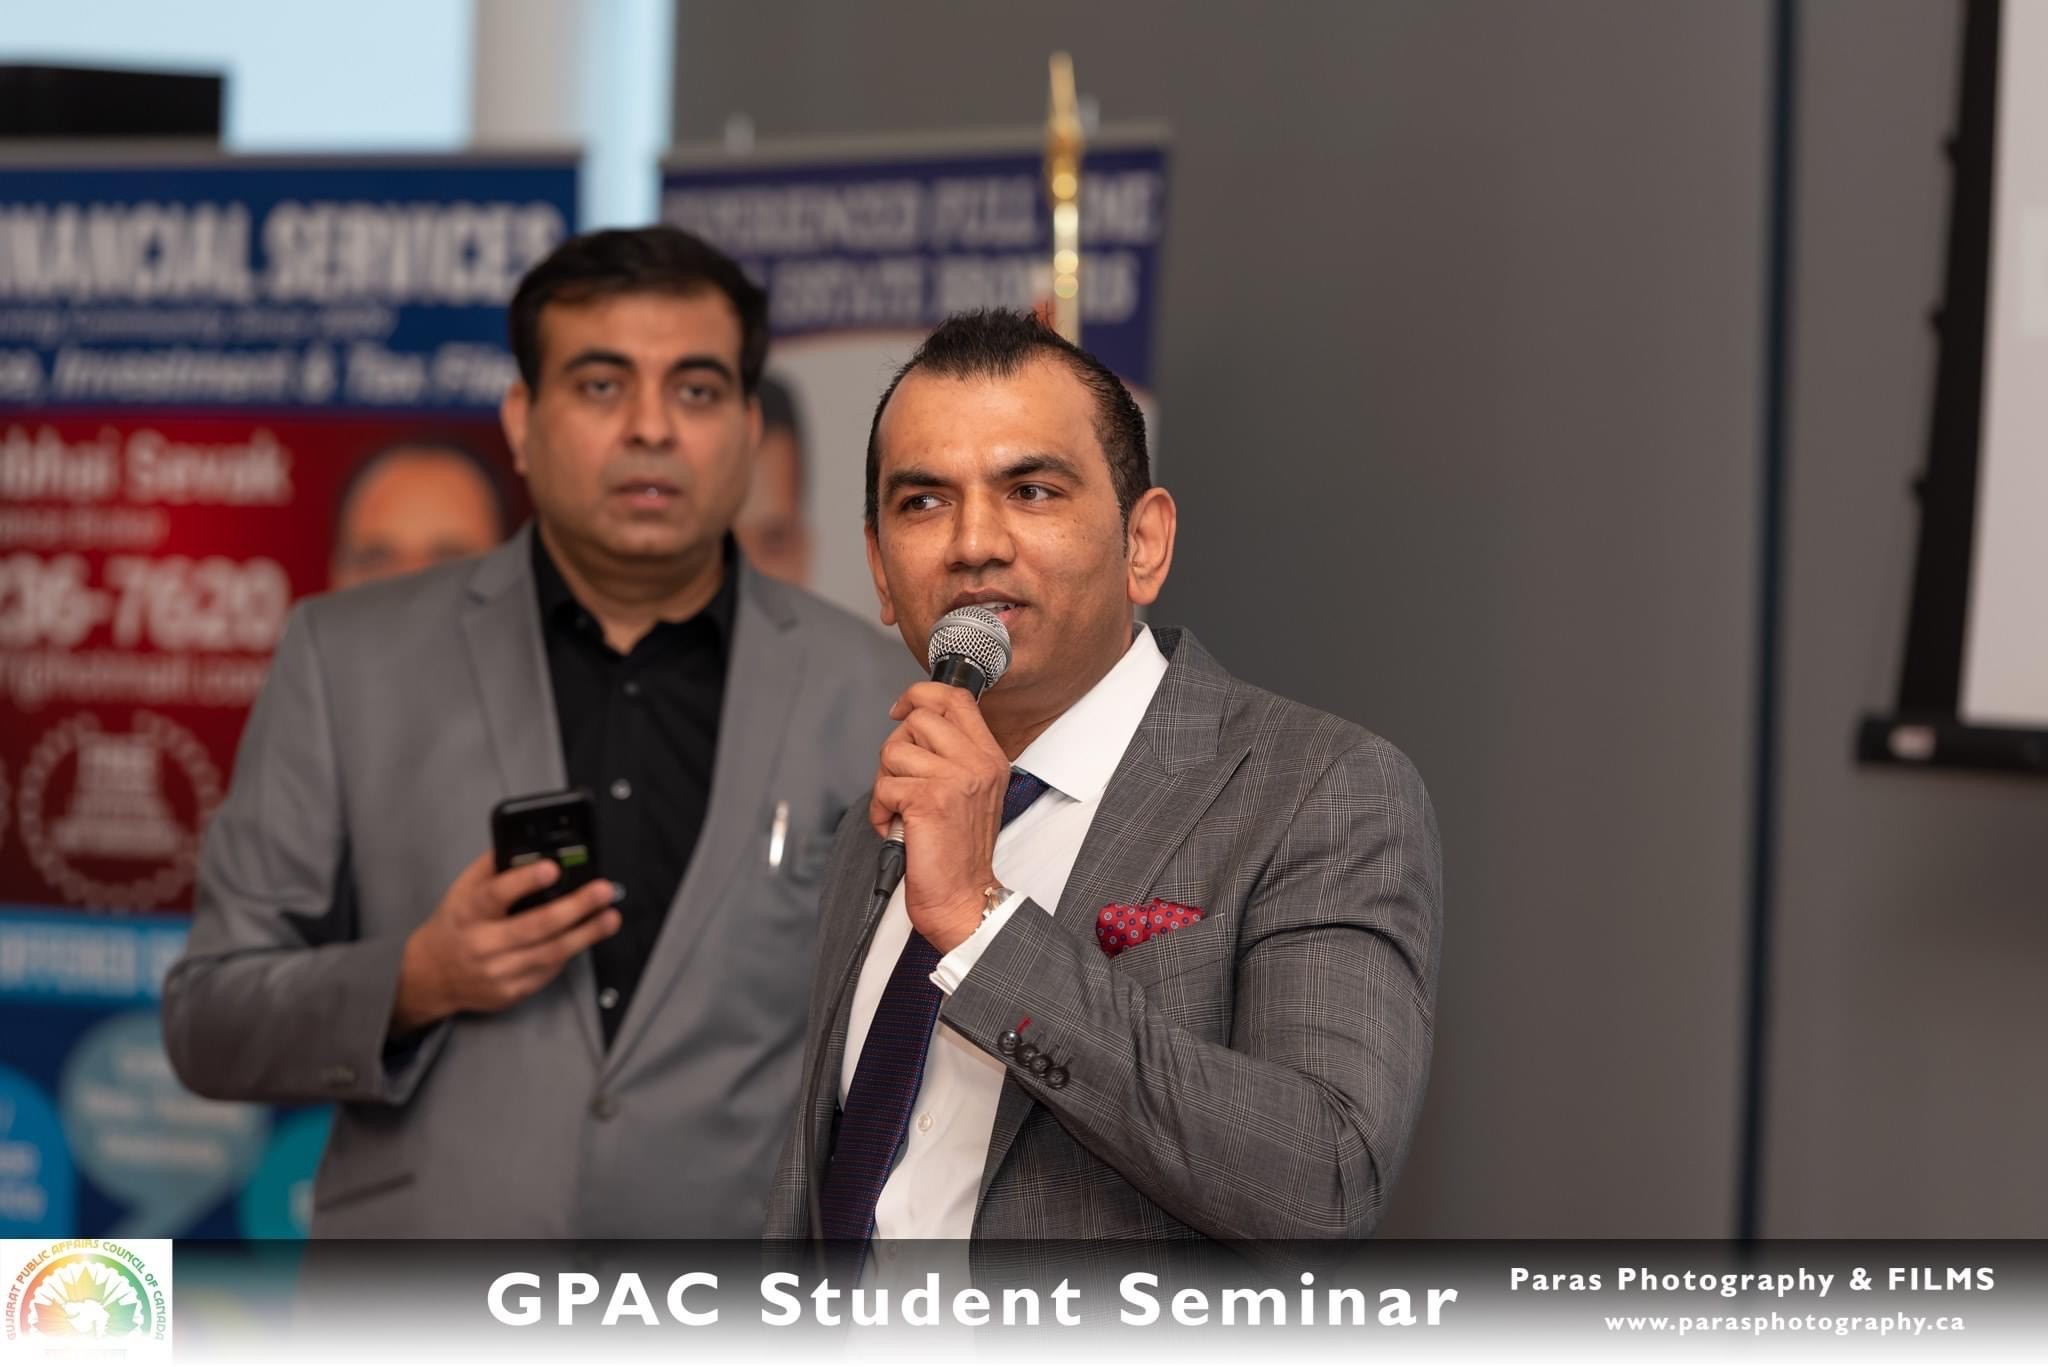 GPAC Student Seminar featuring Mr. Pradyuman Jhala as a Panel Speaker